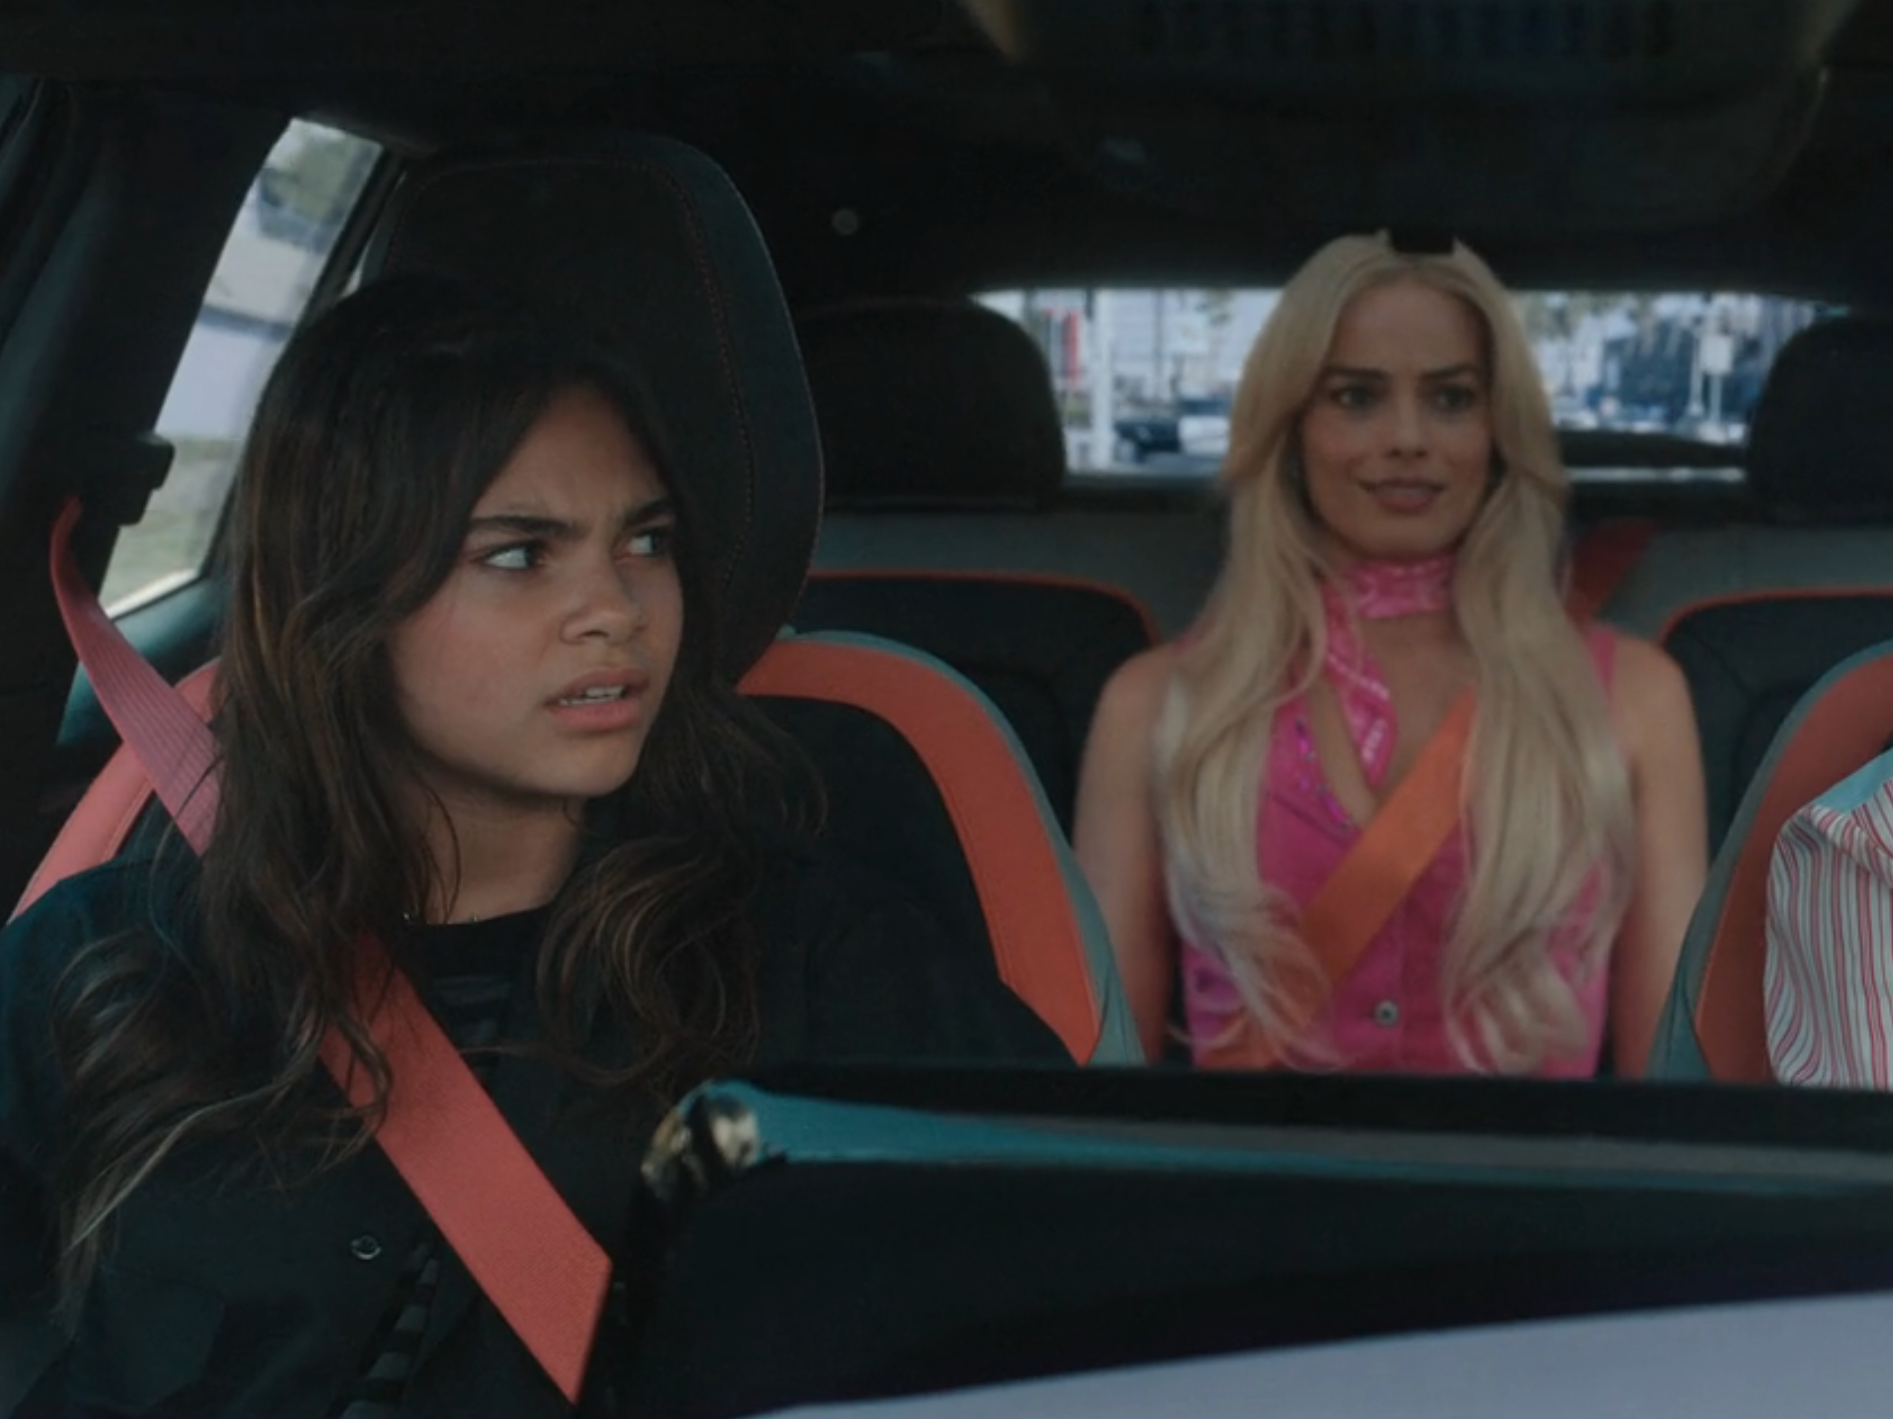 sasha, barbie, and gloria in the car together in barbie. sasha looks disgusted and gloria is cringing